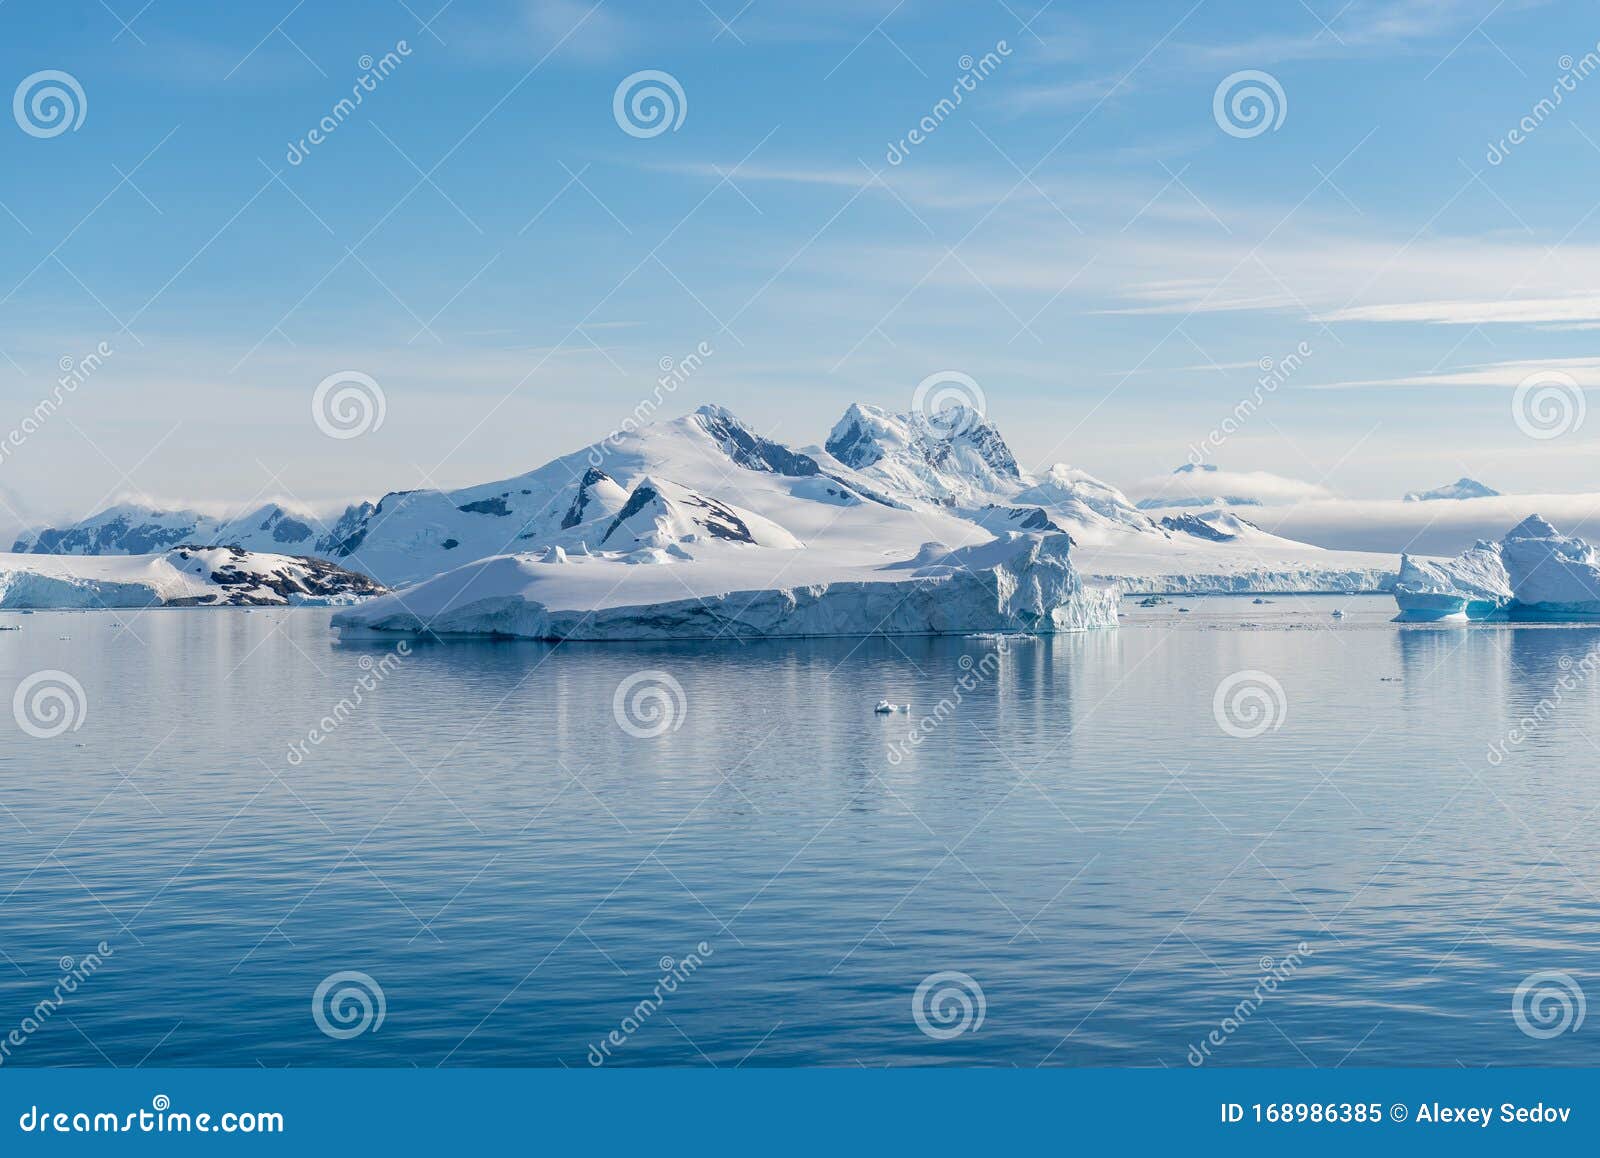 antarctic landscape with iceberg at sea